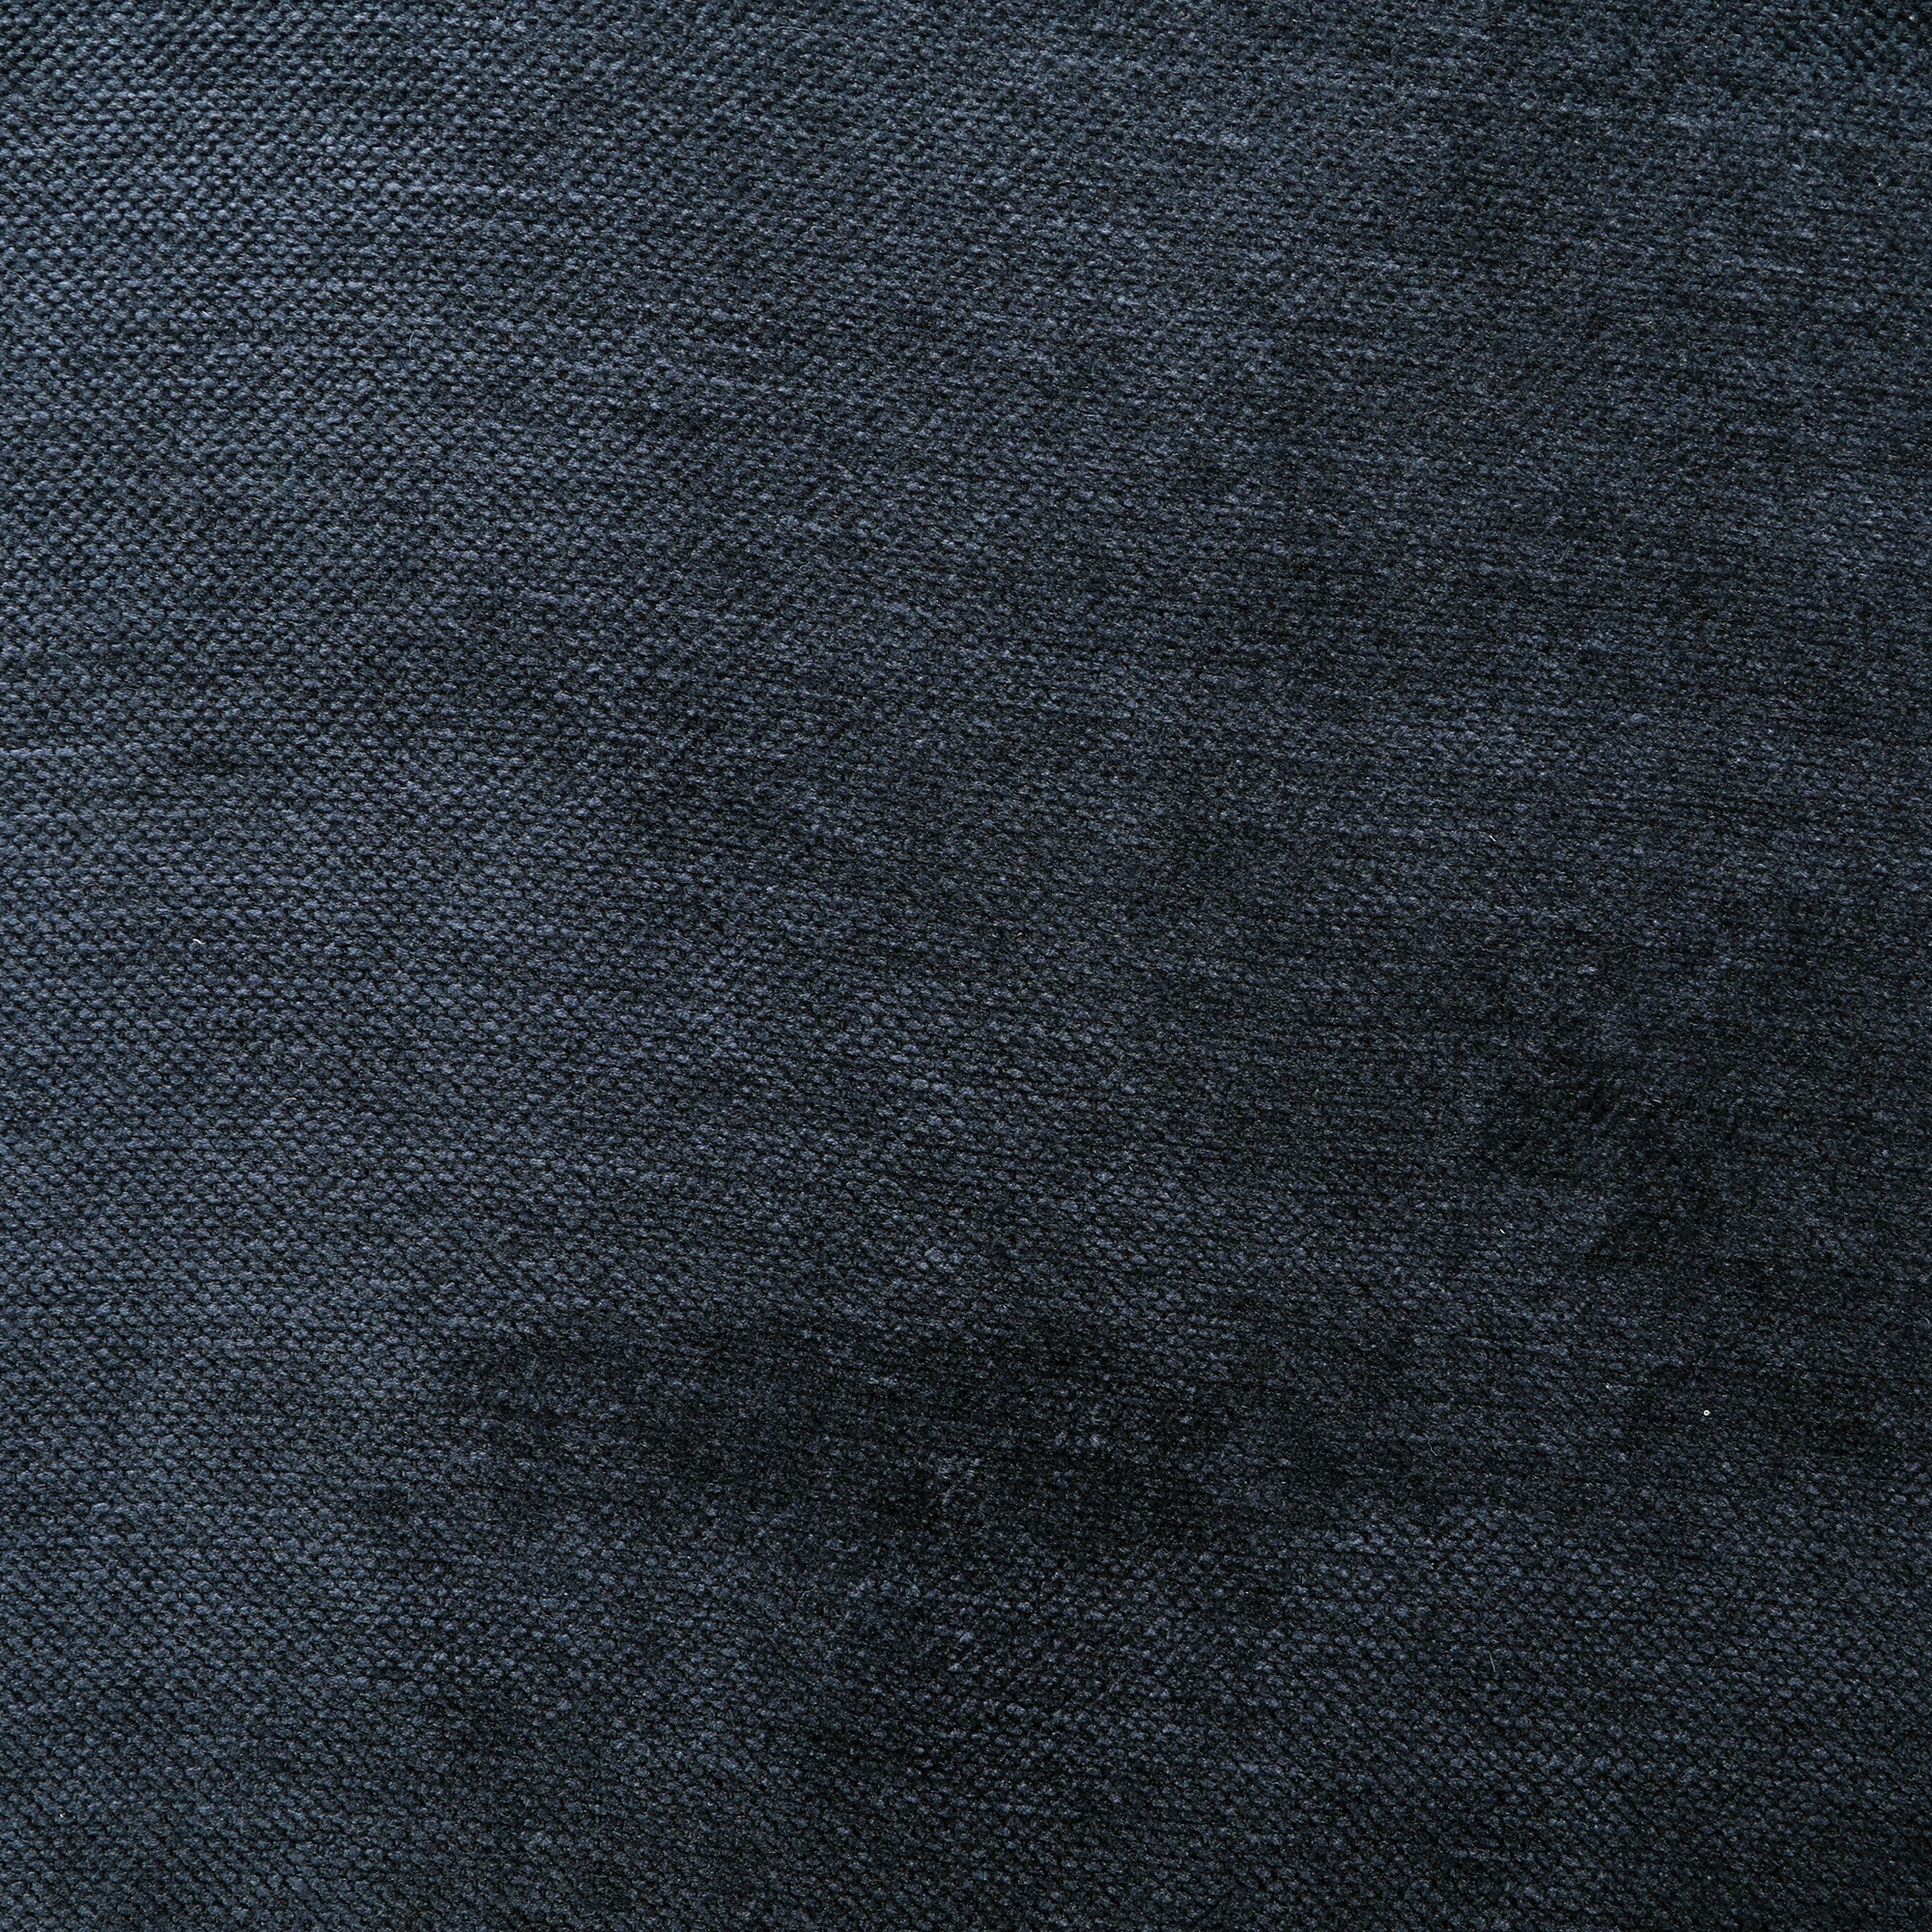 Plain weaved fabric for sofa linen look